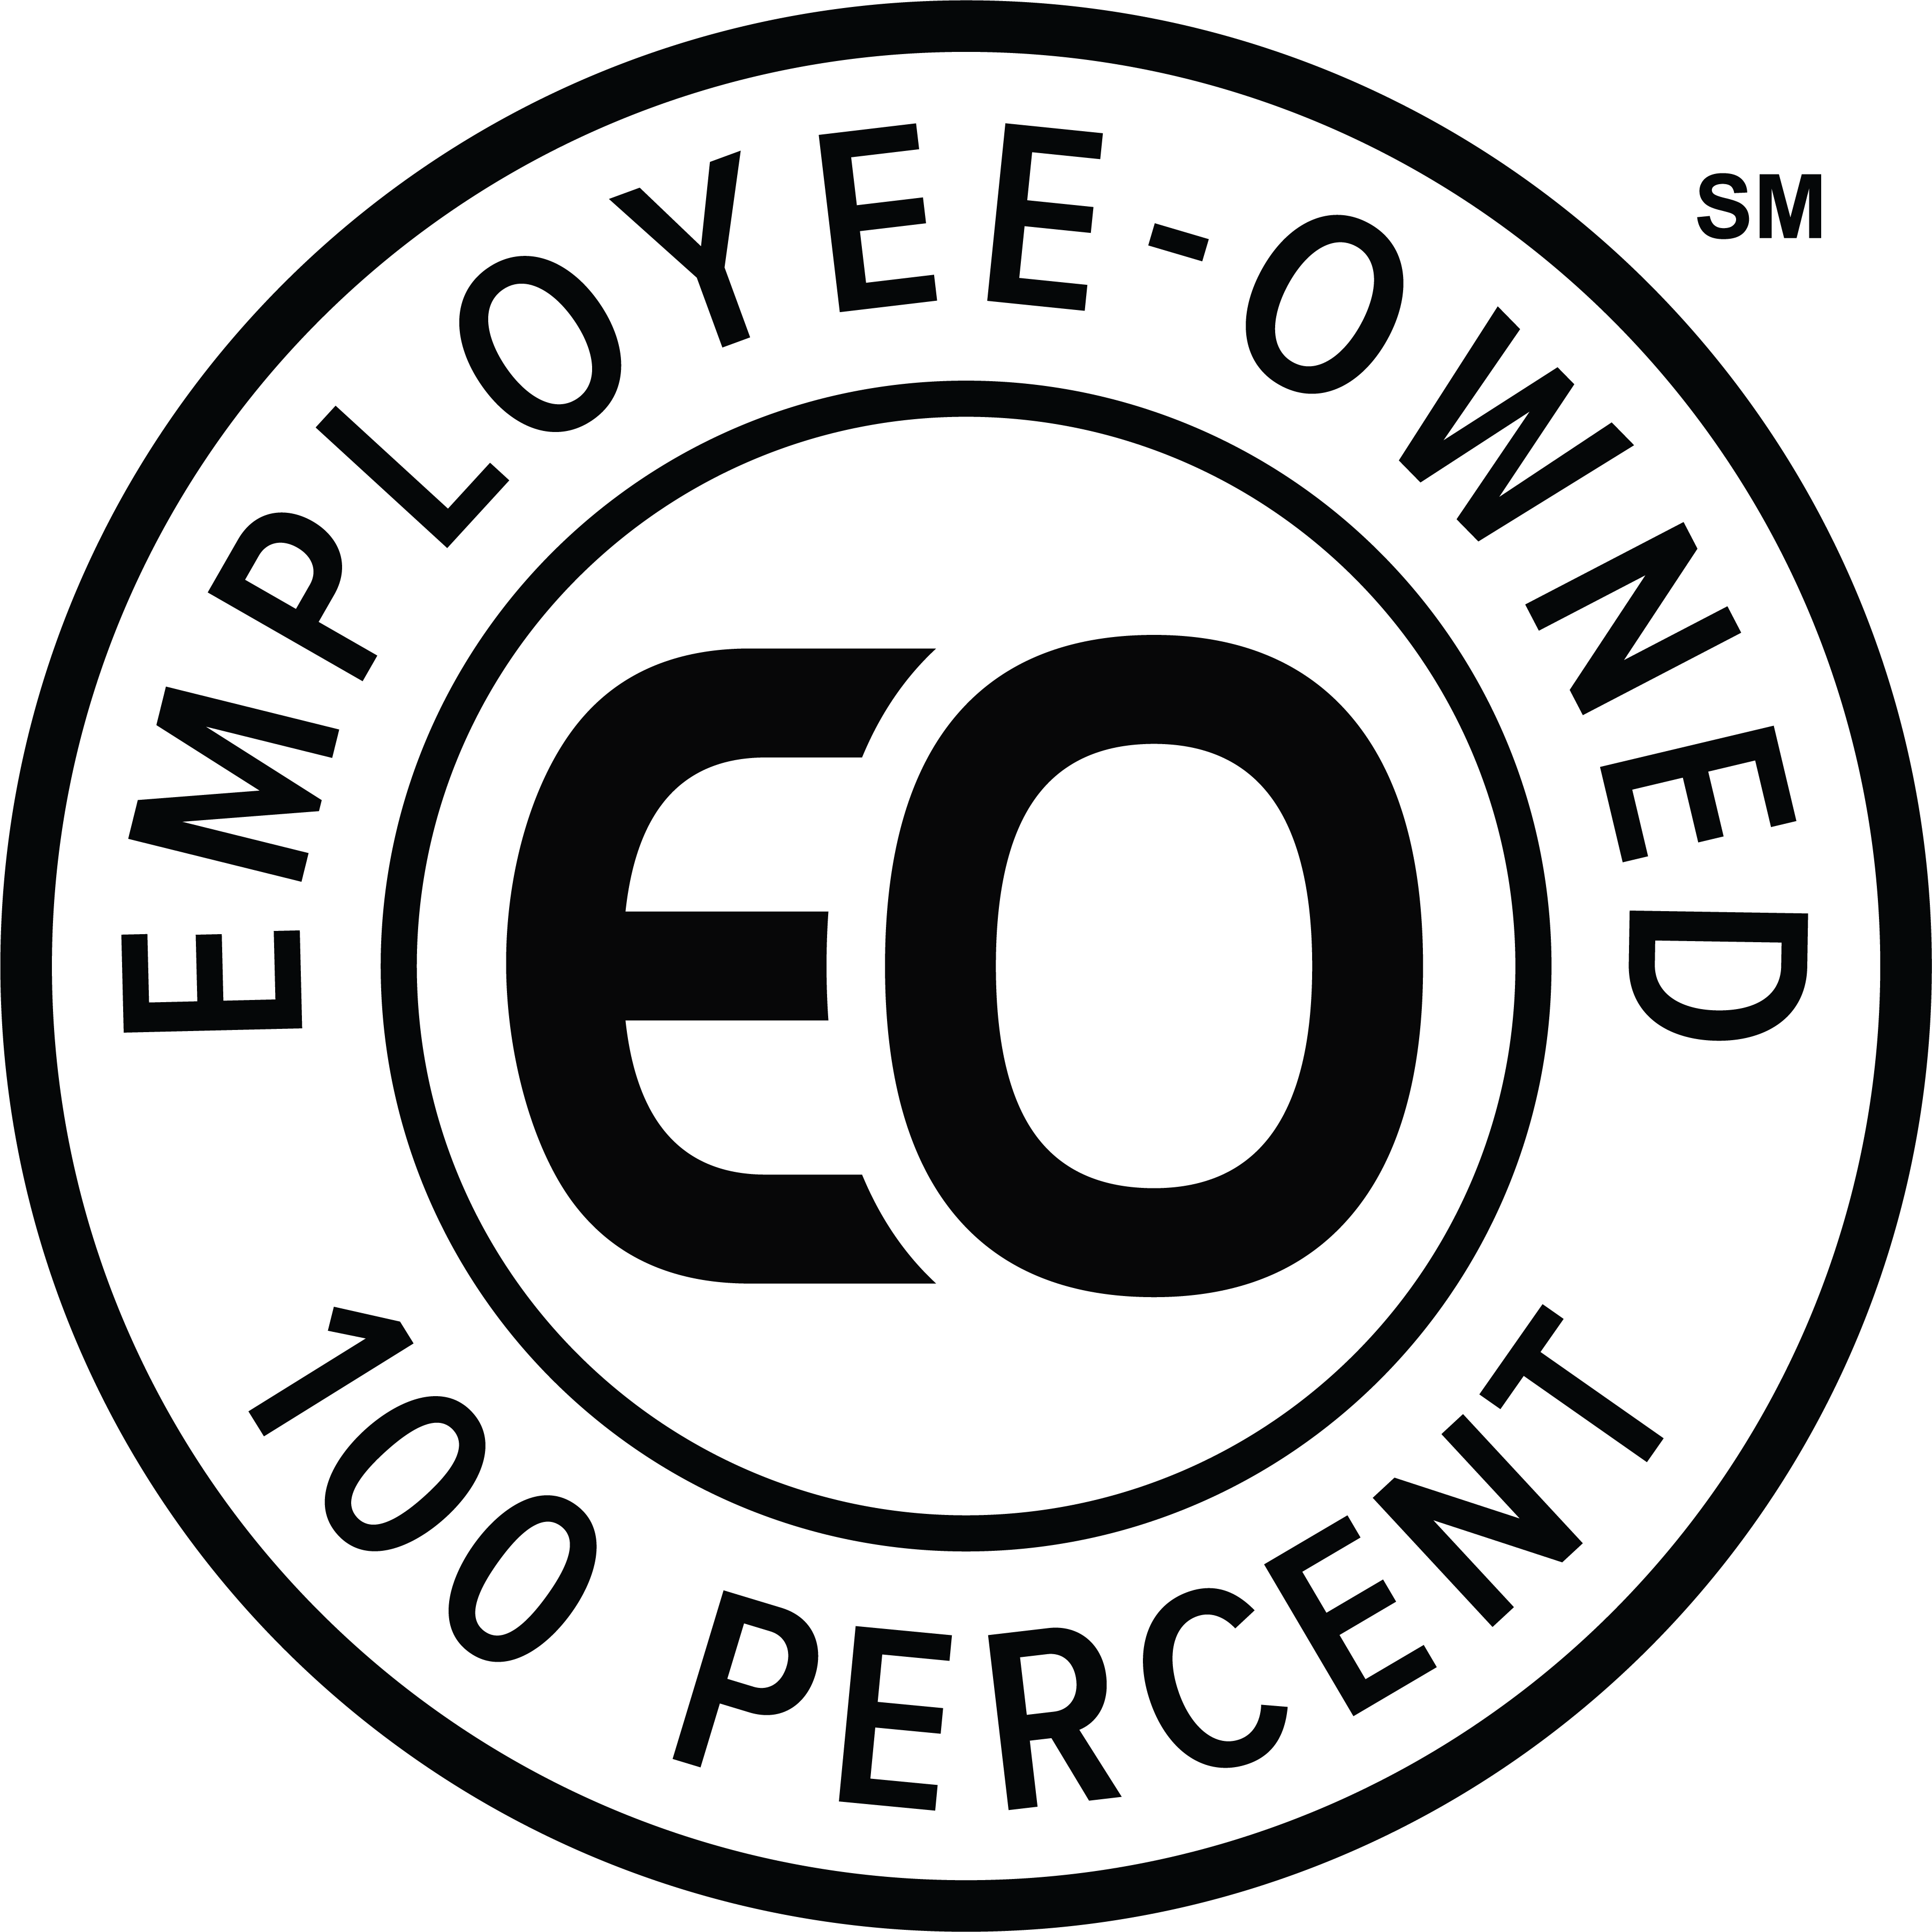 Employee Owned Logo